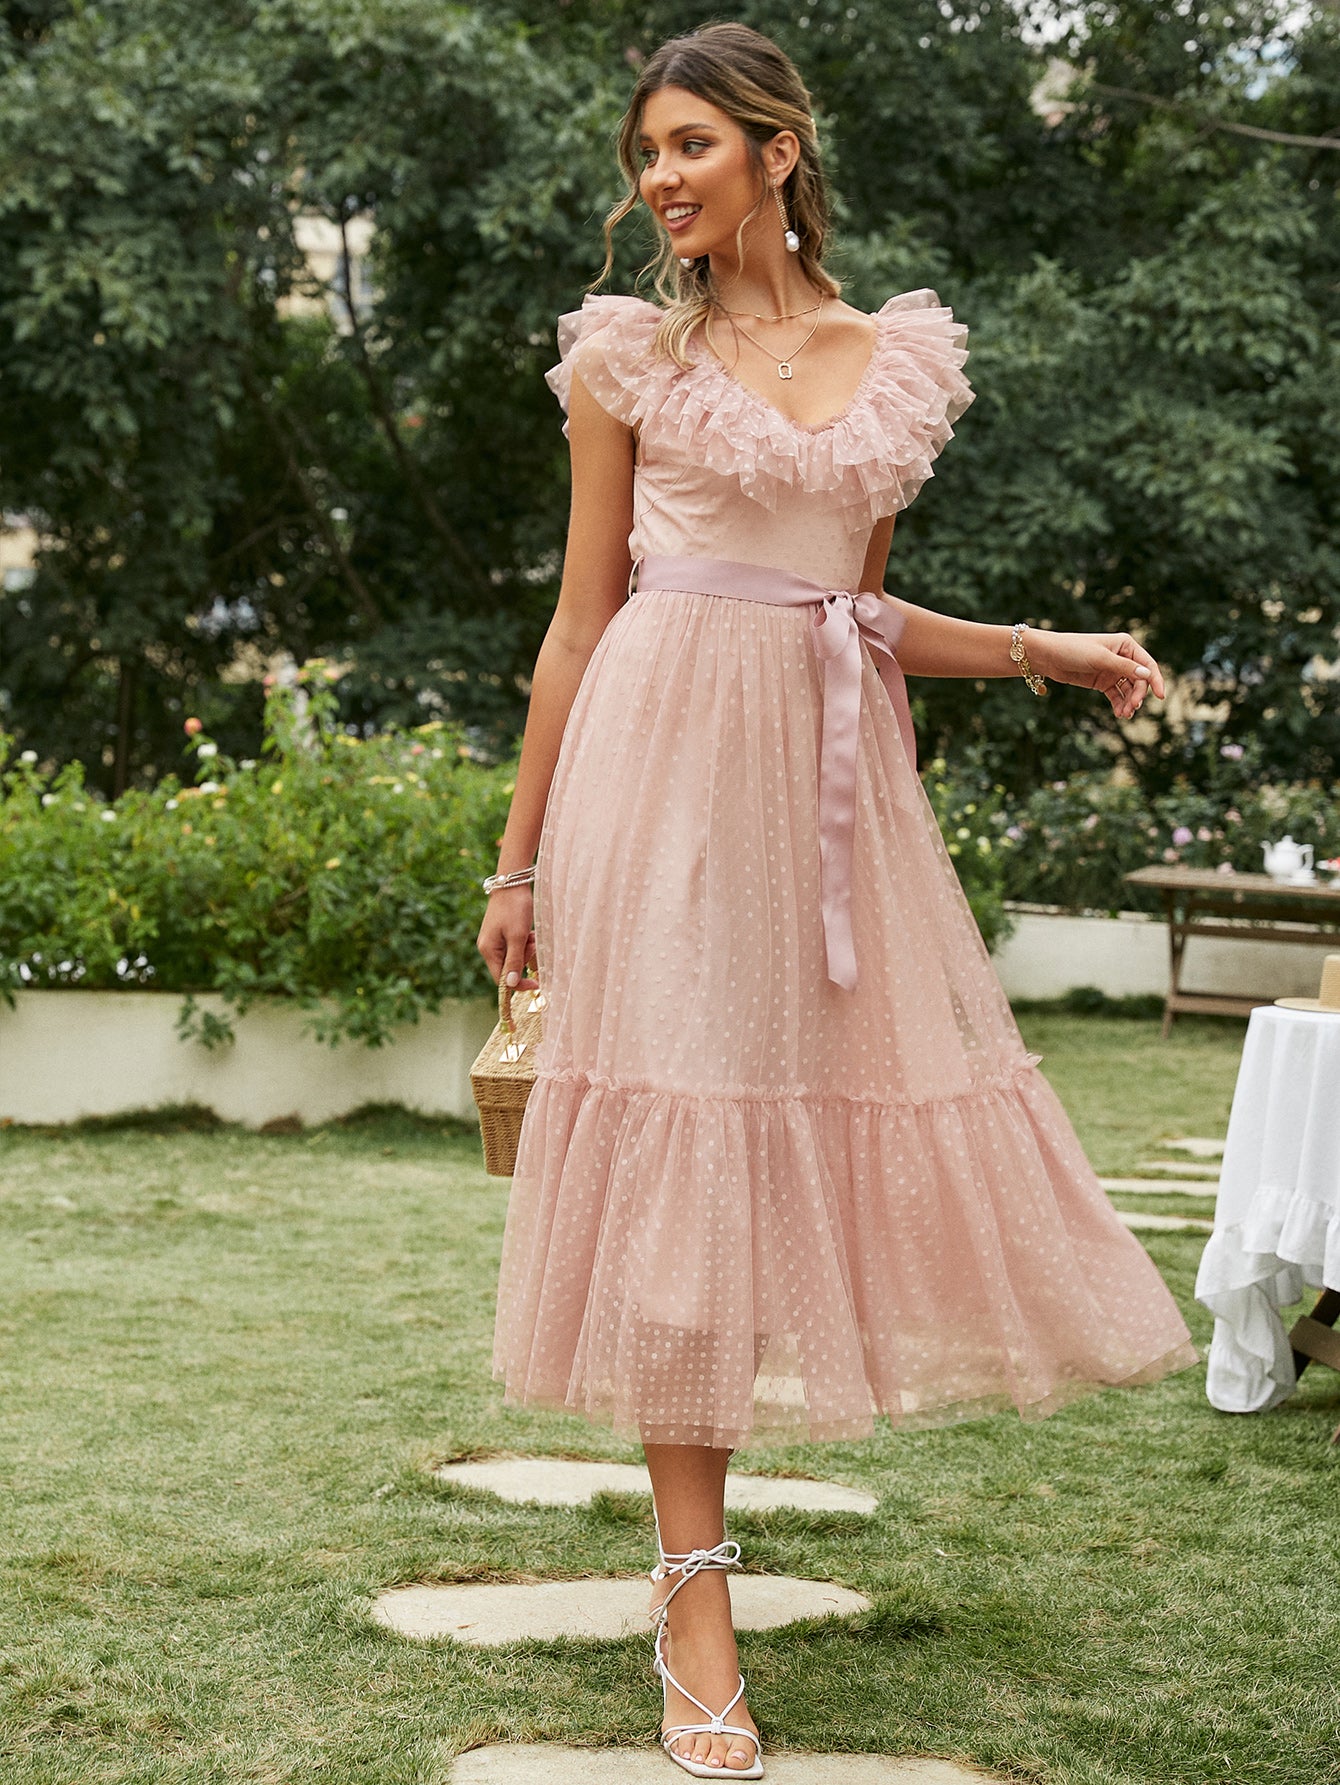 Elegant V-neck mesh polka dot dress